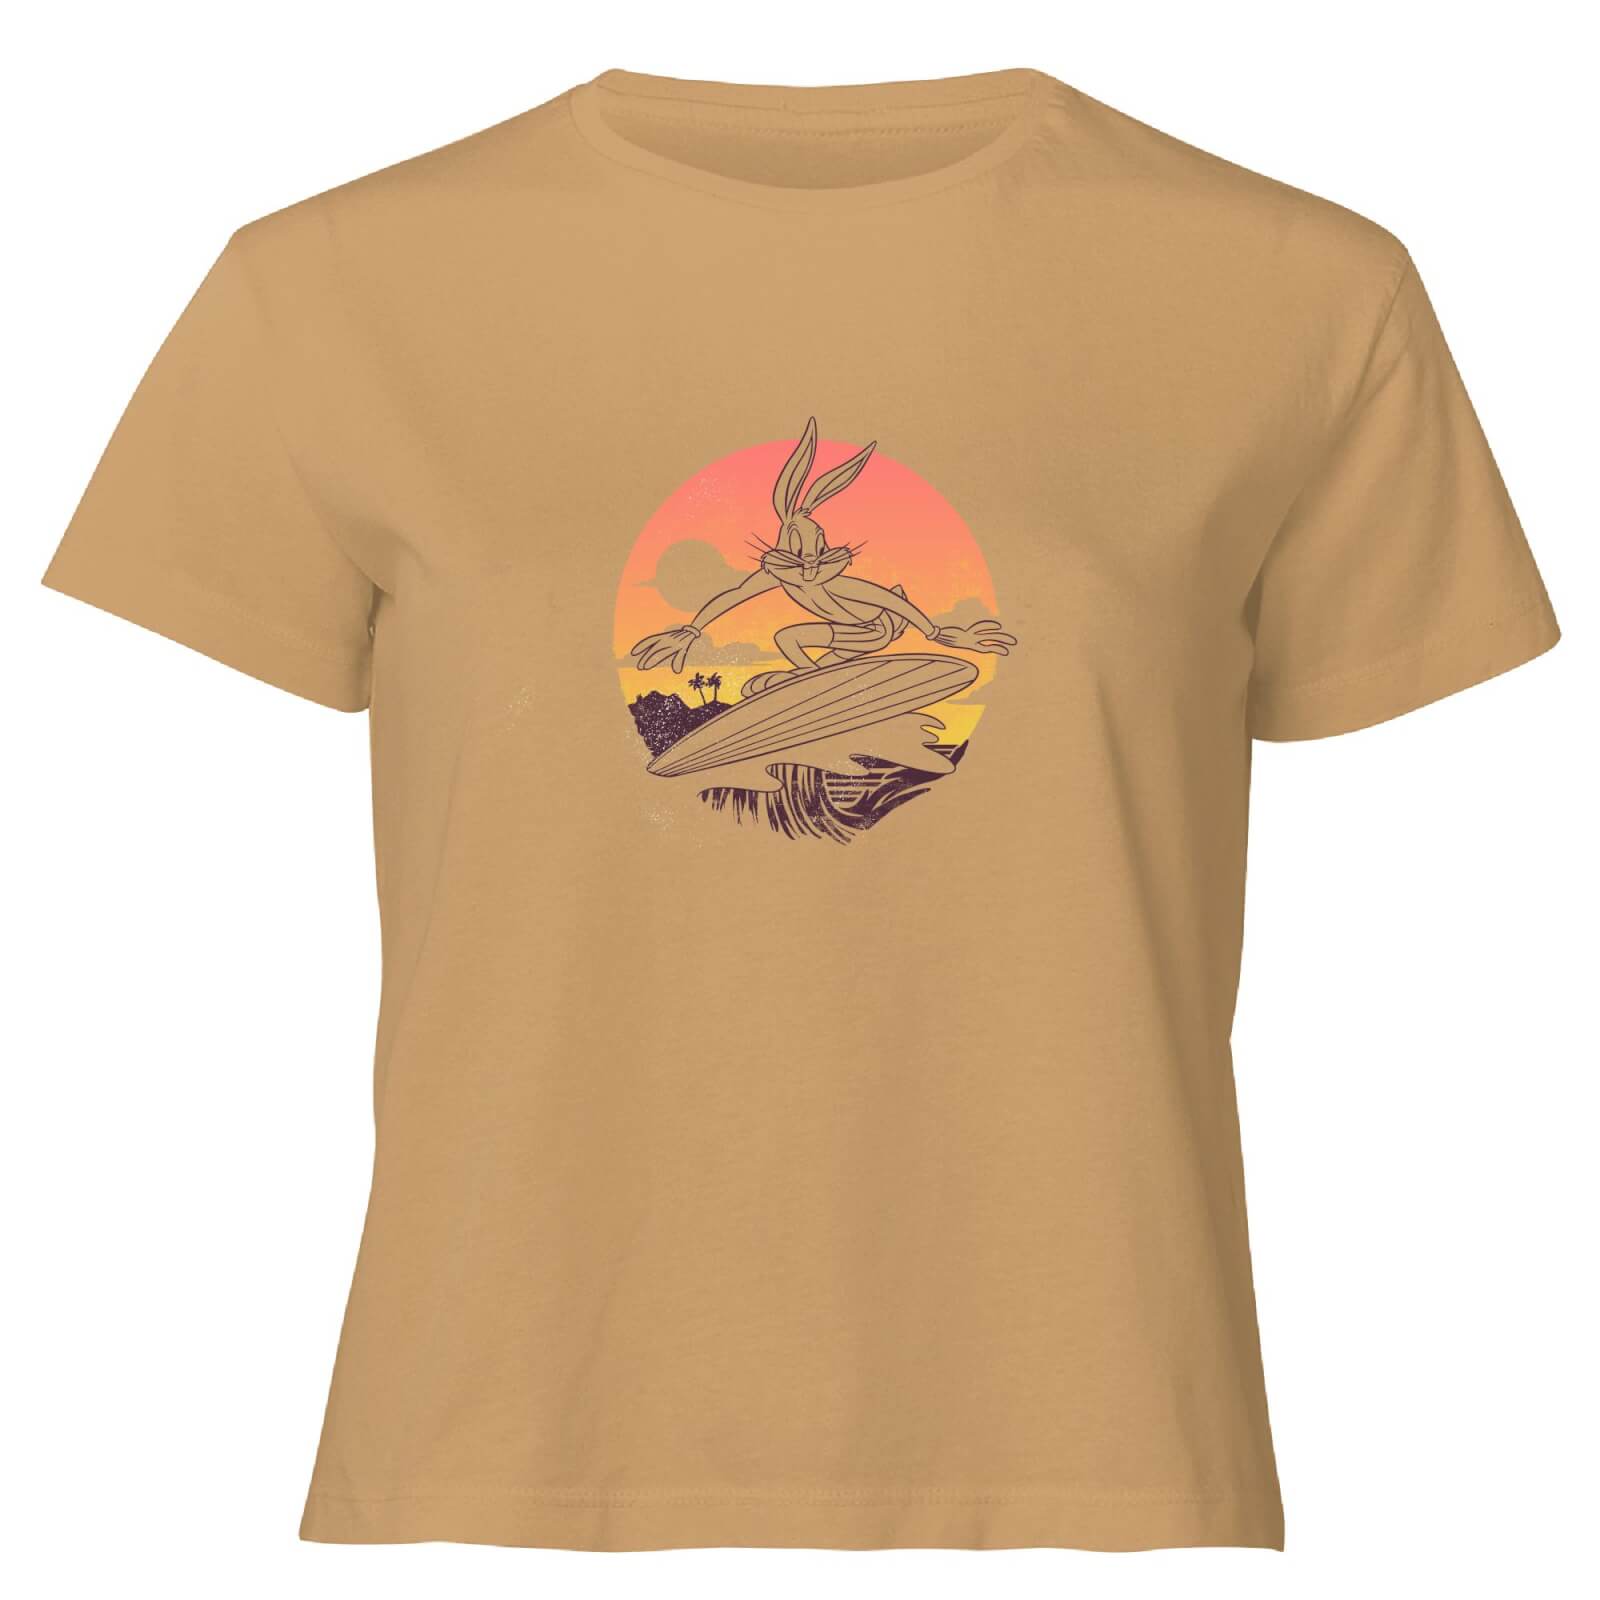 Looney Tunes Surf Women's Cropped T-Shirt - Tan - S - Tan